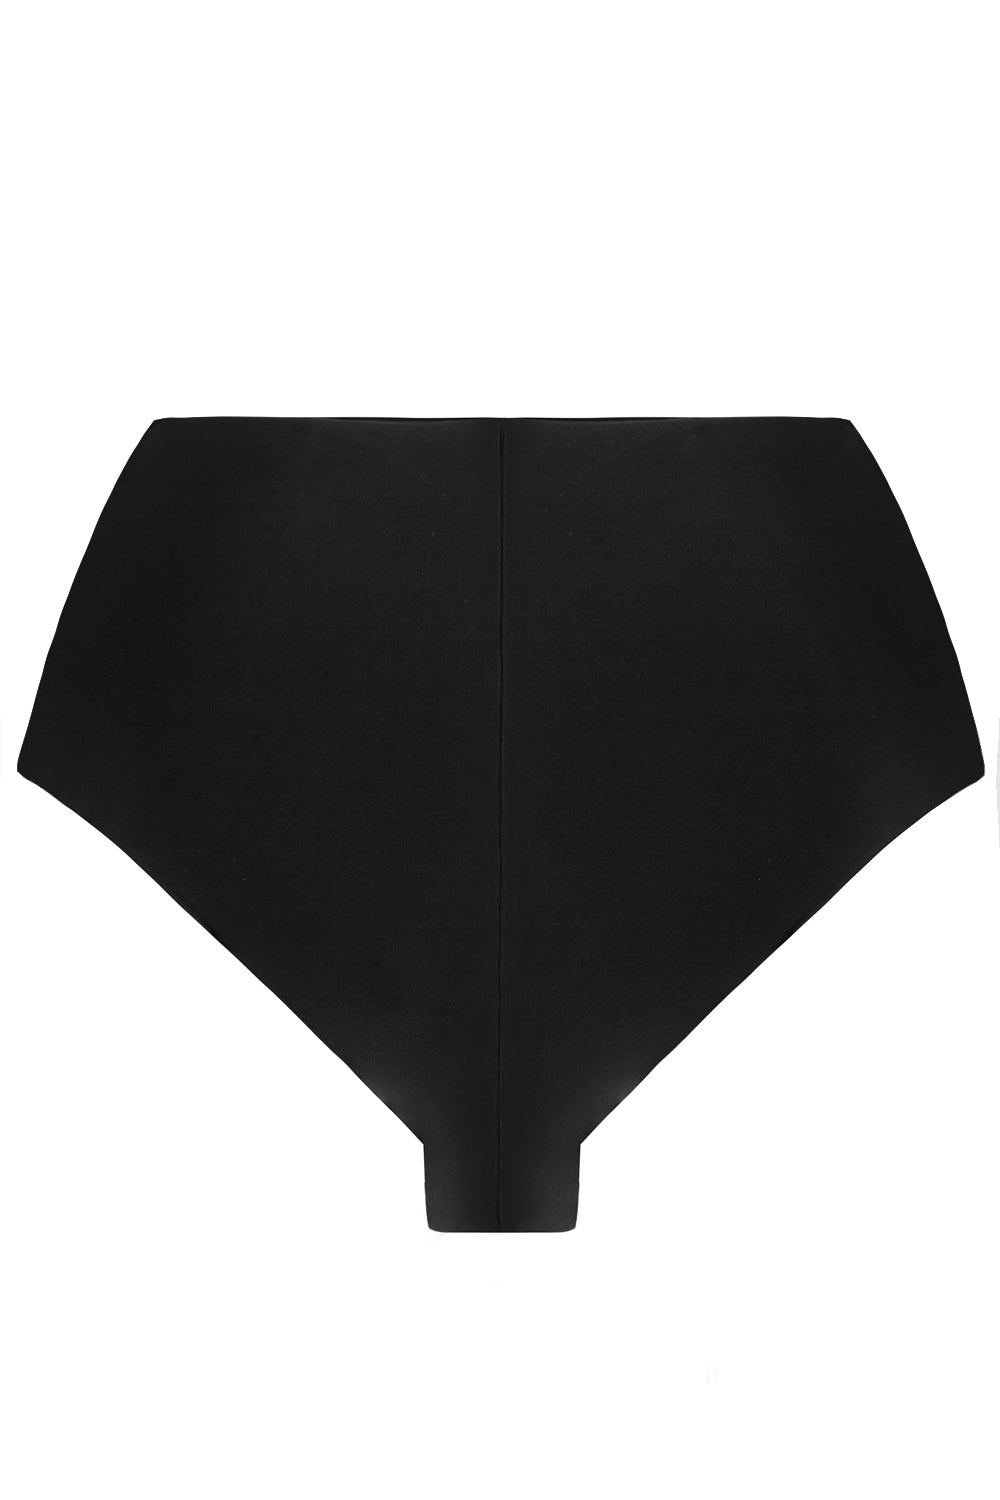 Bisectrix Black high waisted bikini bottom